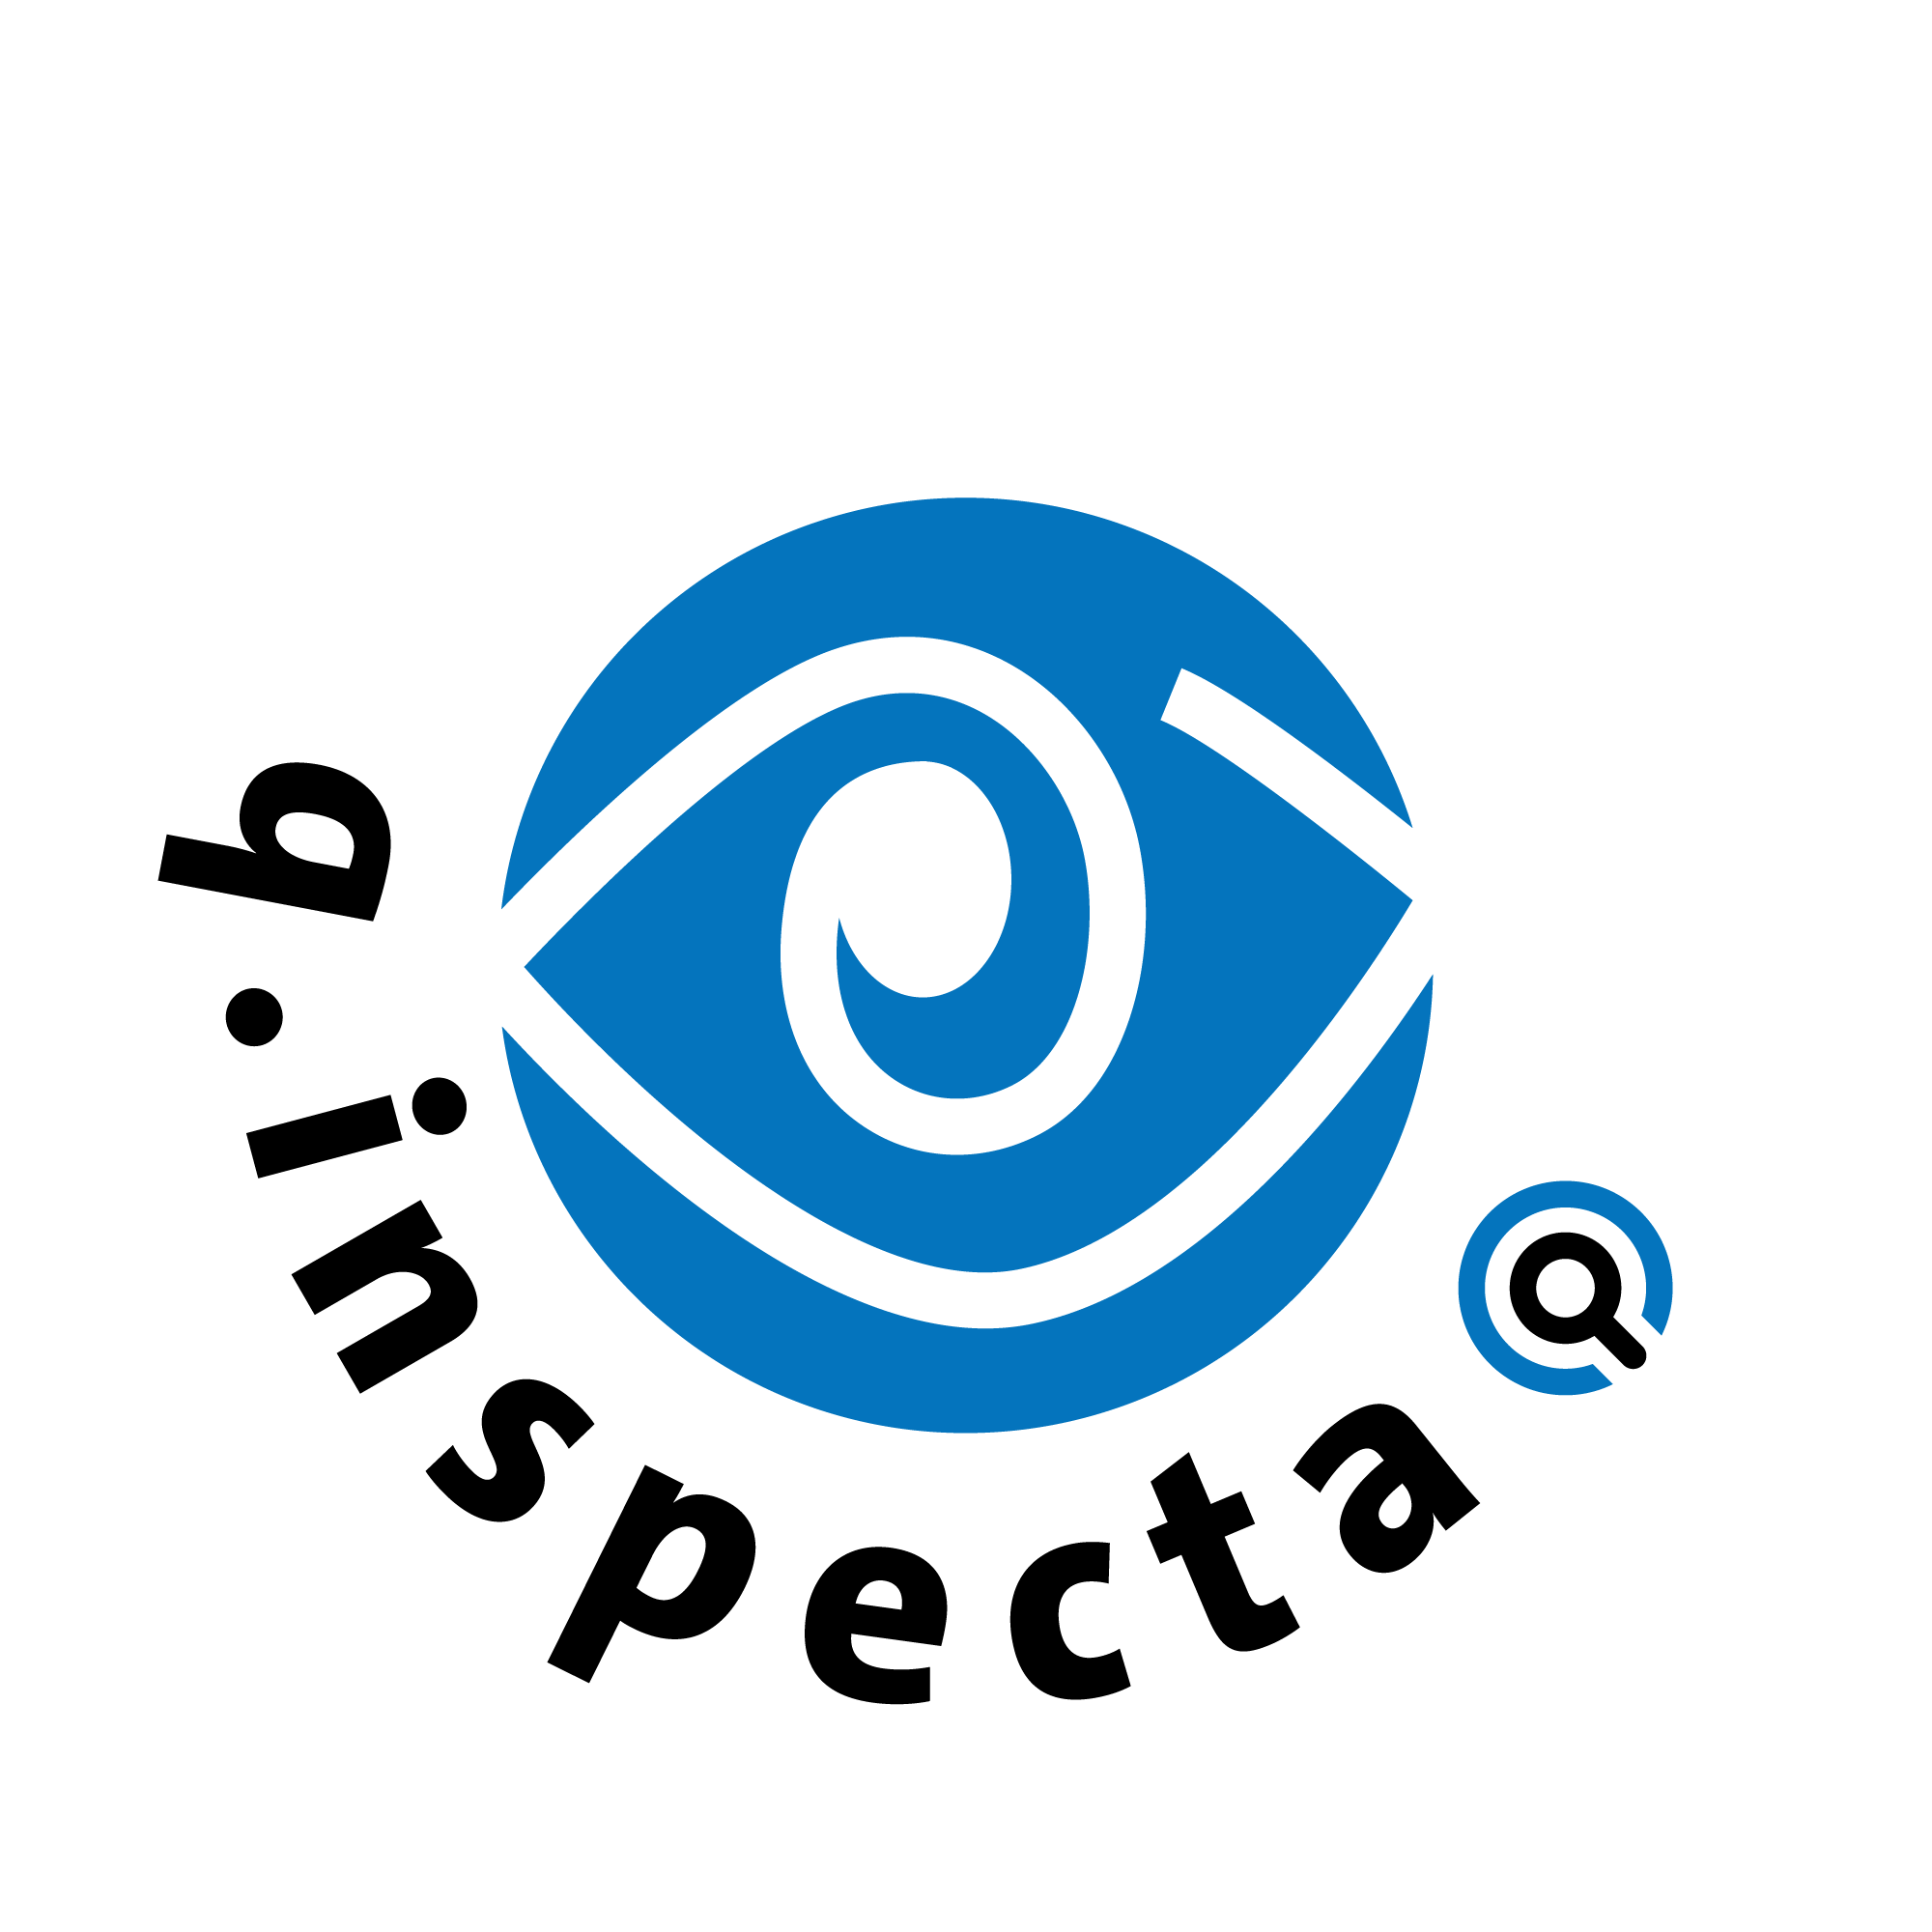 q.inspecta marque de certification sans code